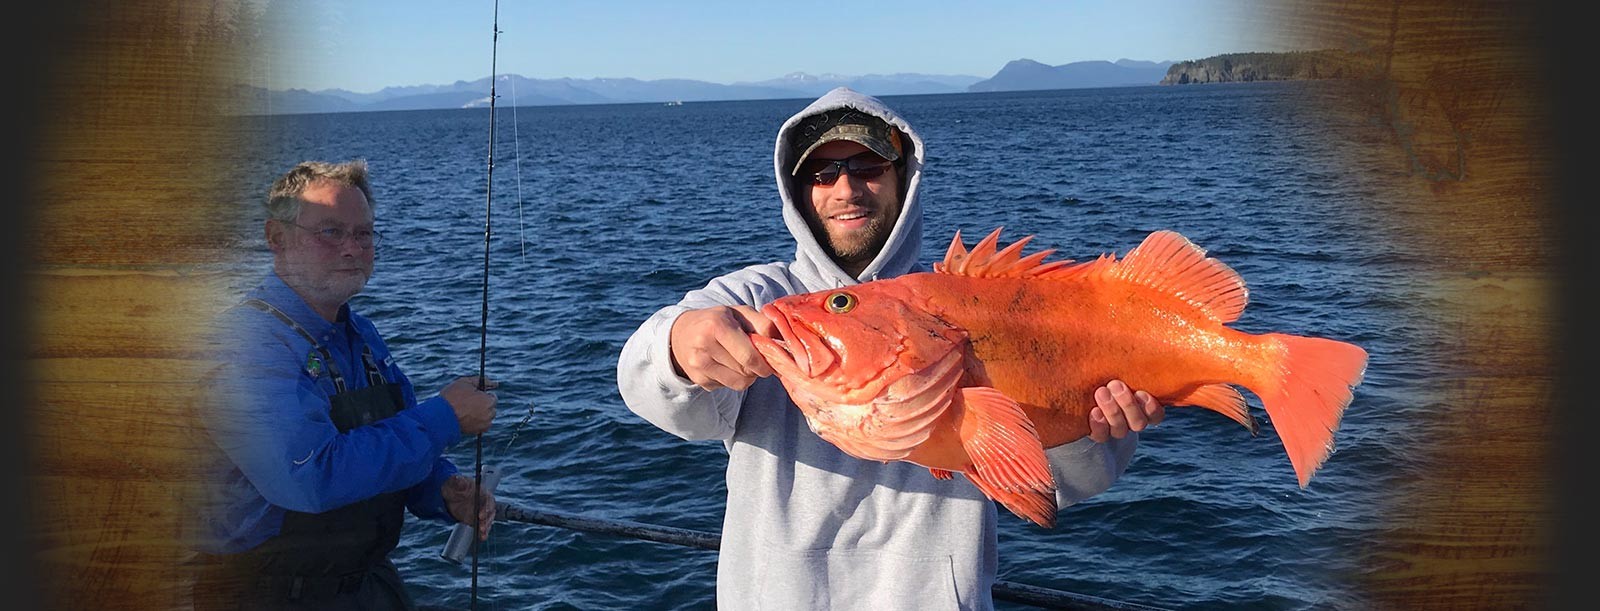 Smiling man holding yelloweye fish